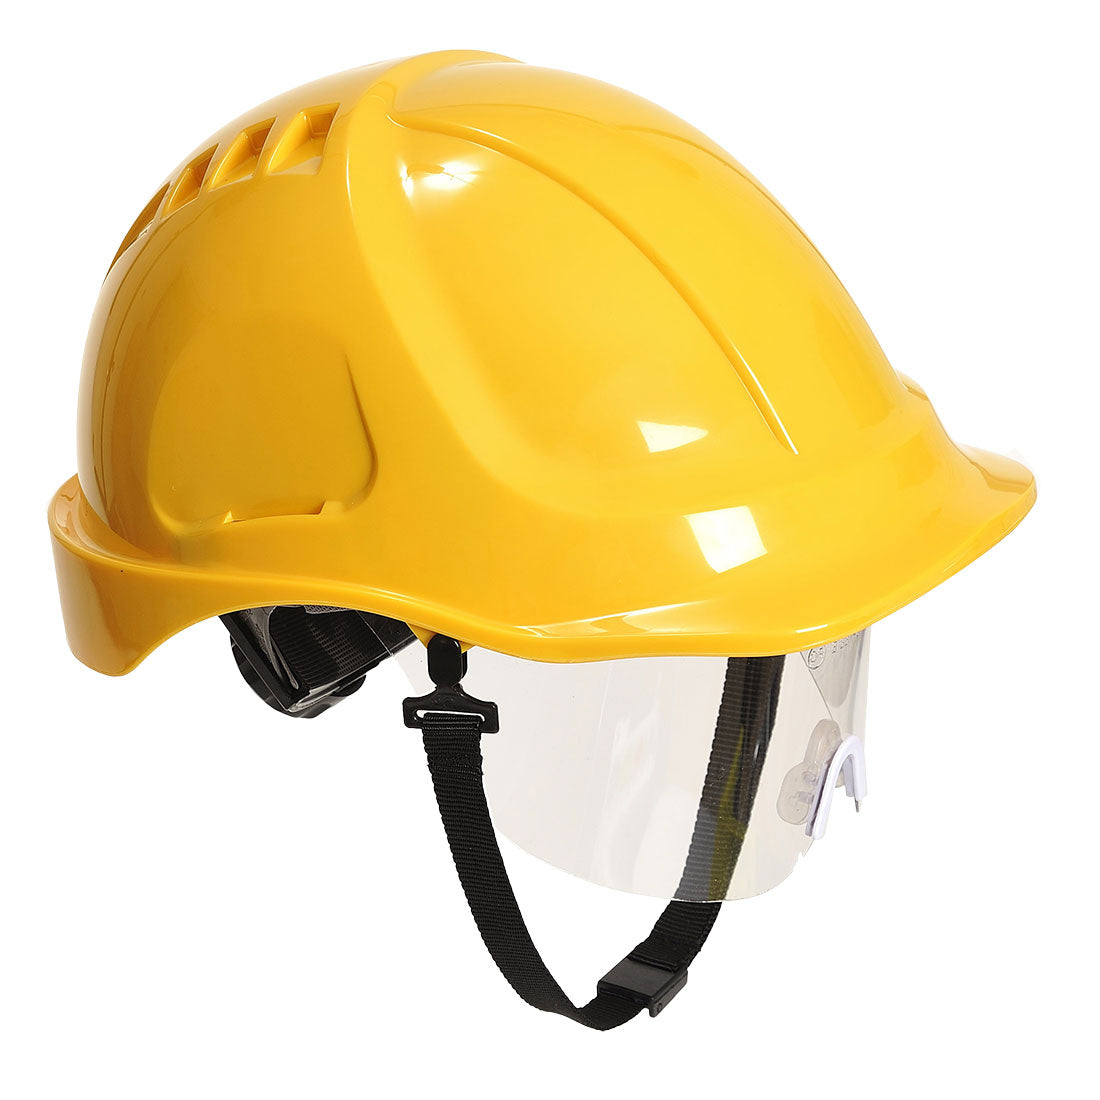 Portwest PW54 Endurance Plus Visor Helmet non-vented yellow 